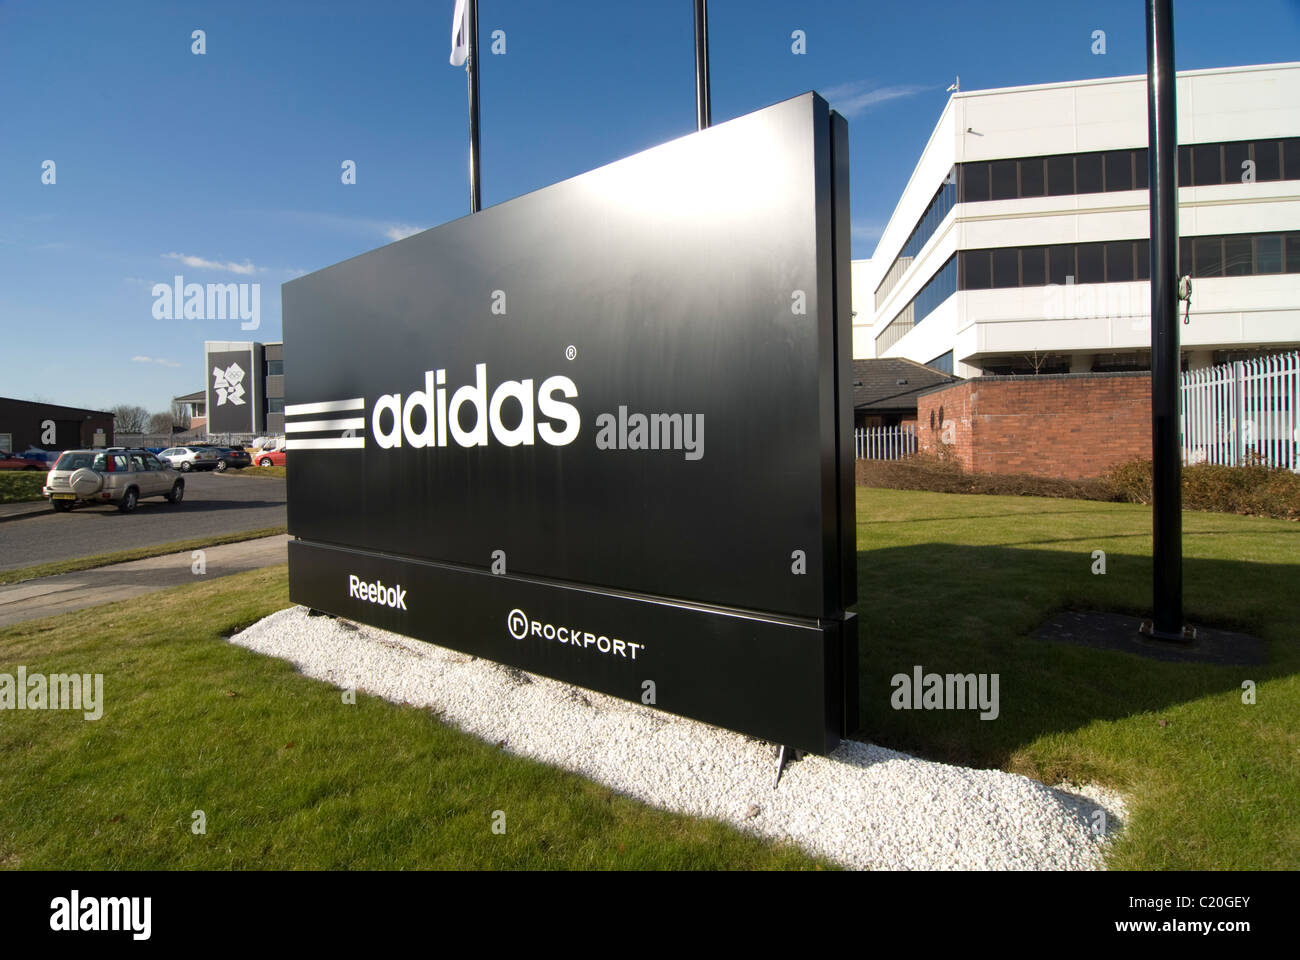 Adidas Geschäft zentrale Stockport - Alamy